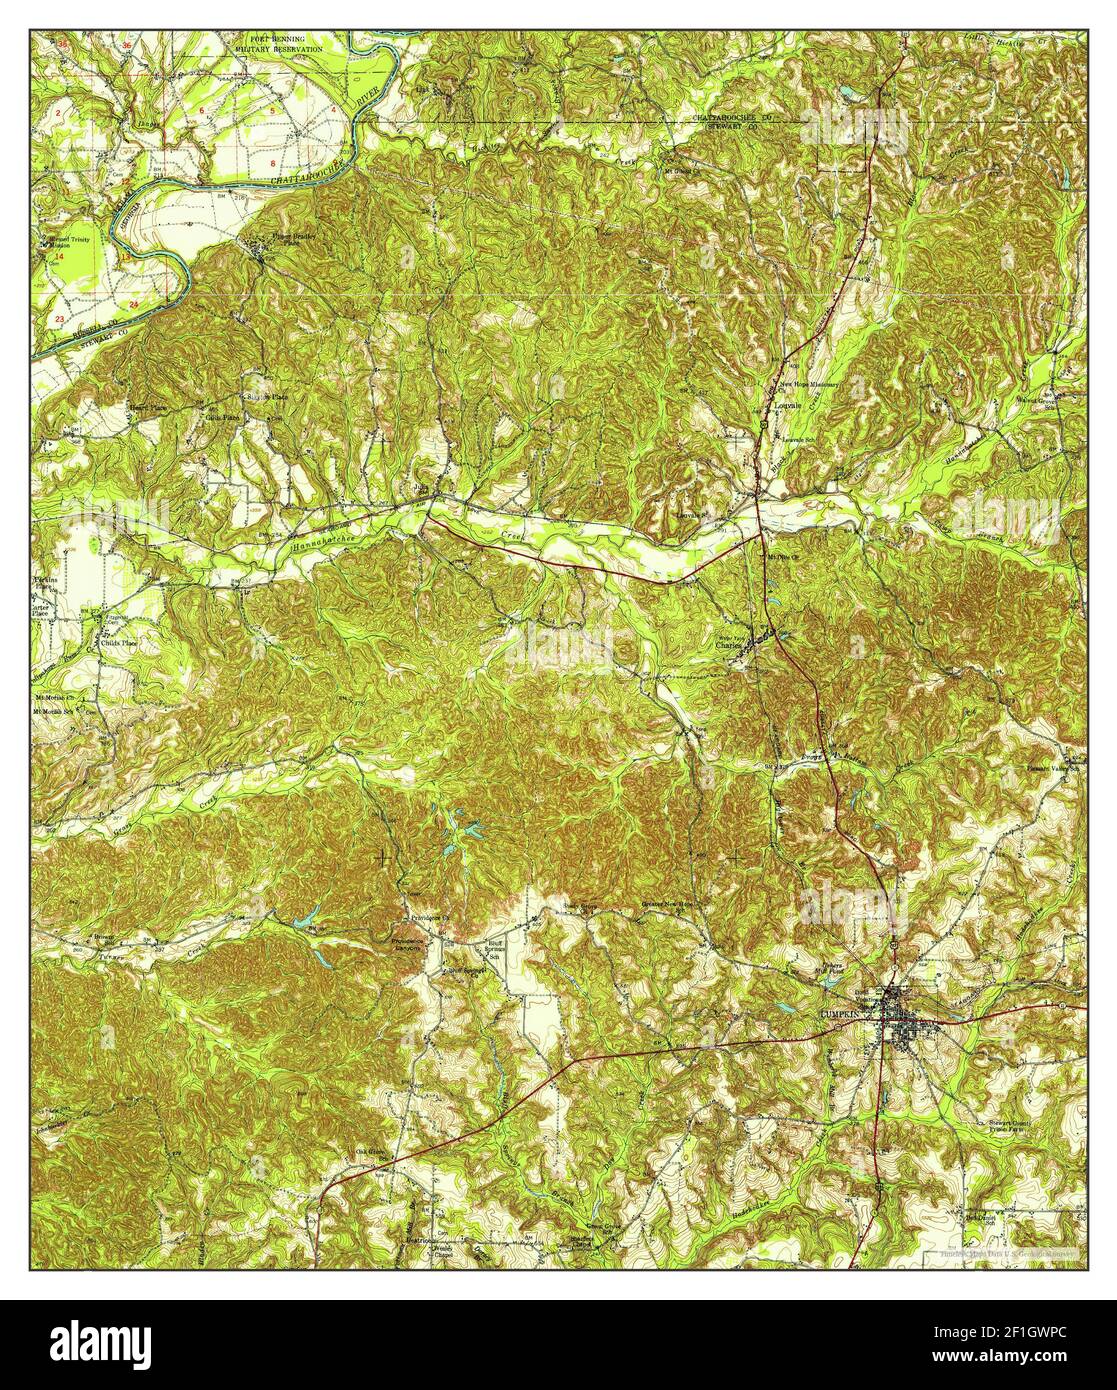 Lumpkin, Georgia, map 1950, 1:62500, United States of America by Timeless Maps, data U.S. Geological Survey Stock Photo